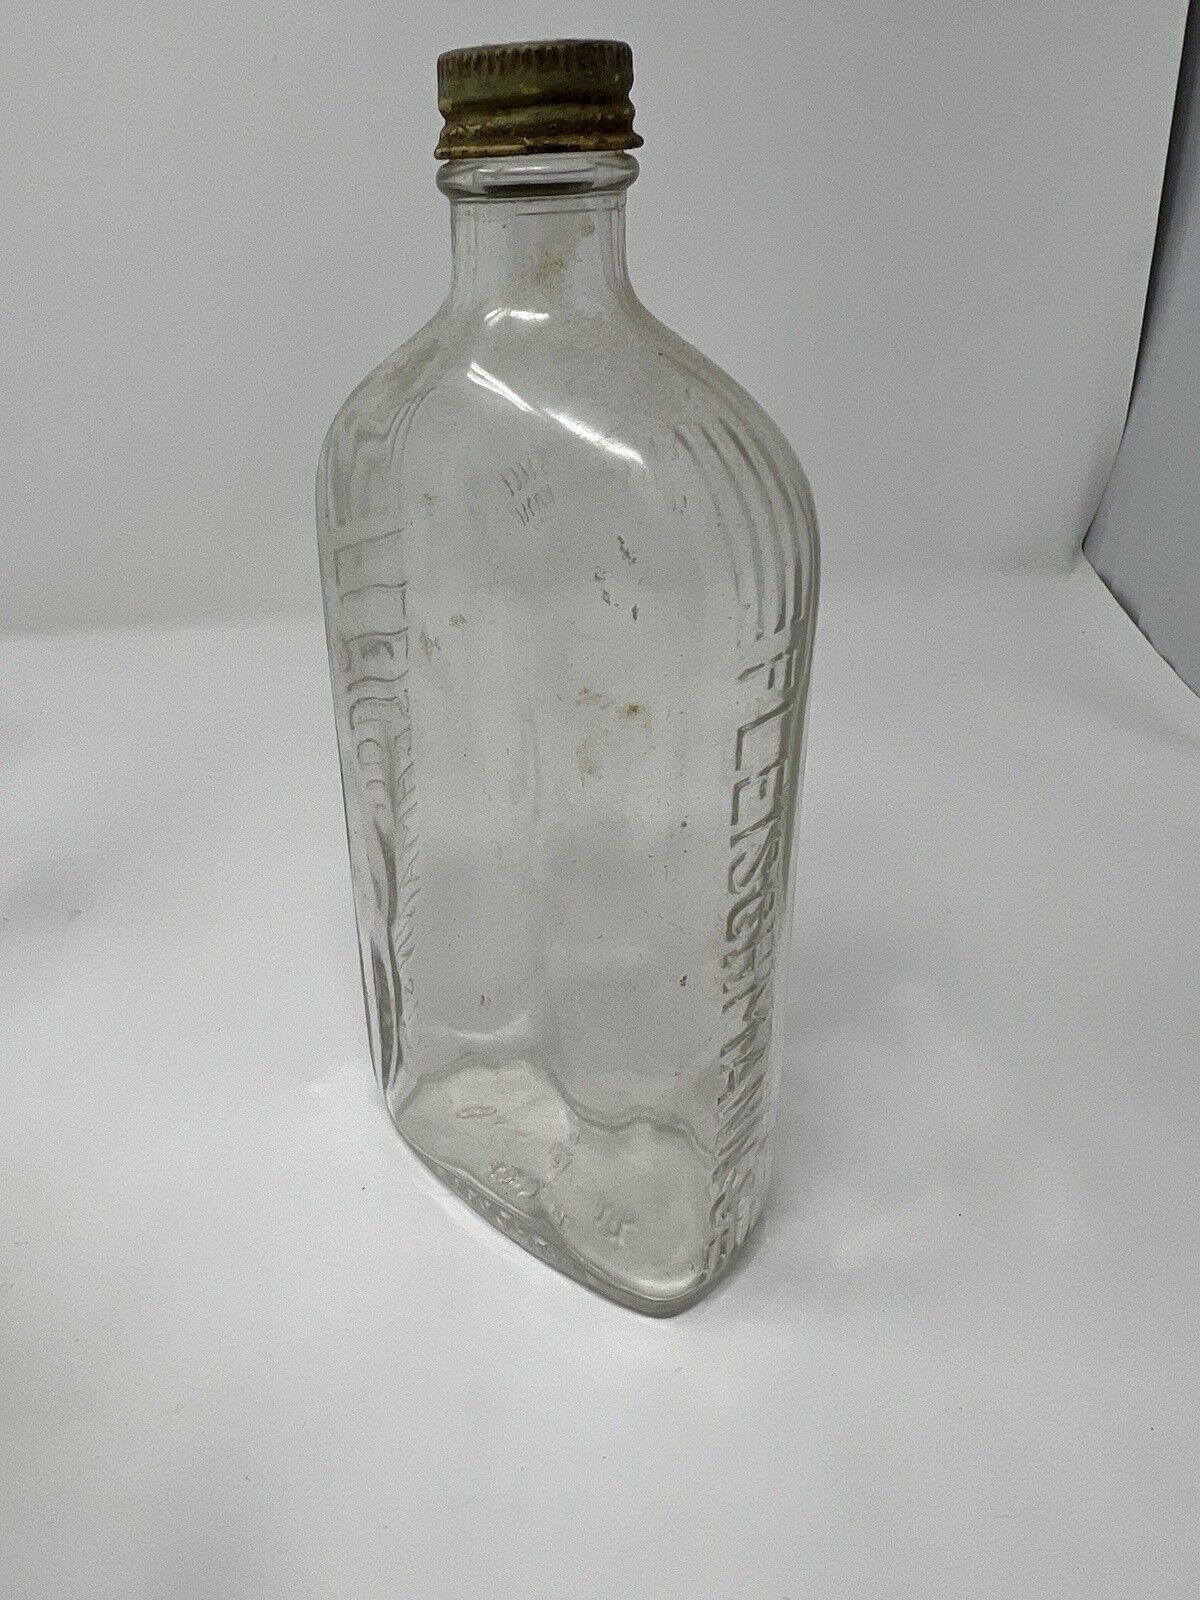 Vintage Embossed Fleischmann’s Gin Liquor Bottle 1930s Clear Threaded Top Nice